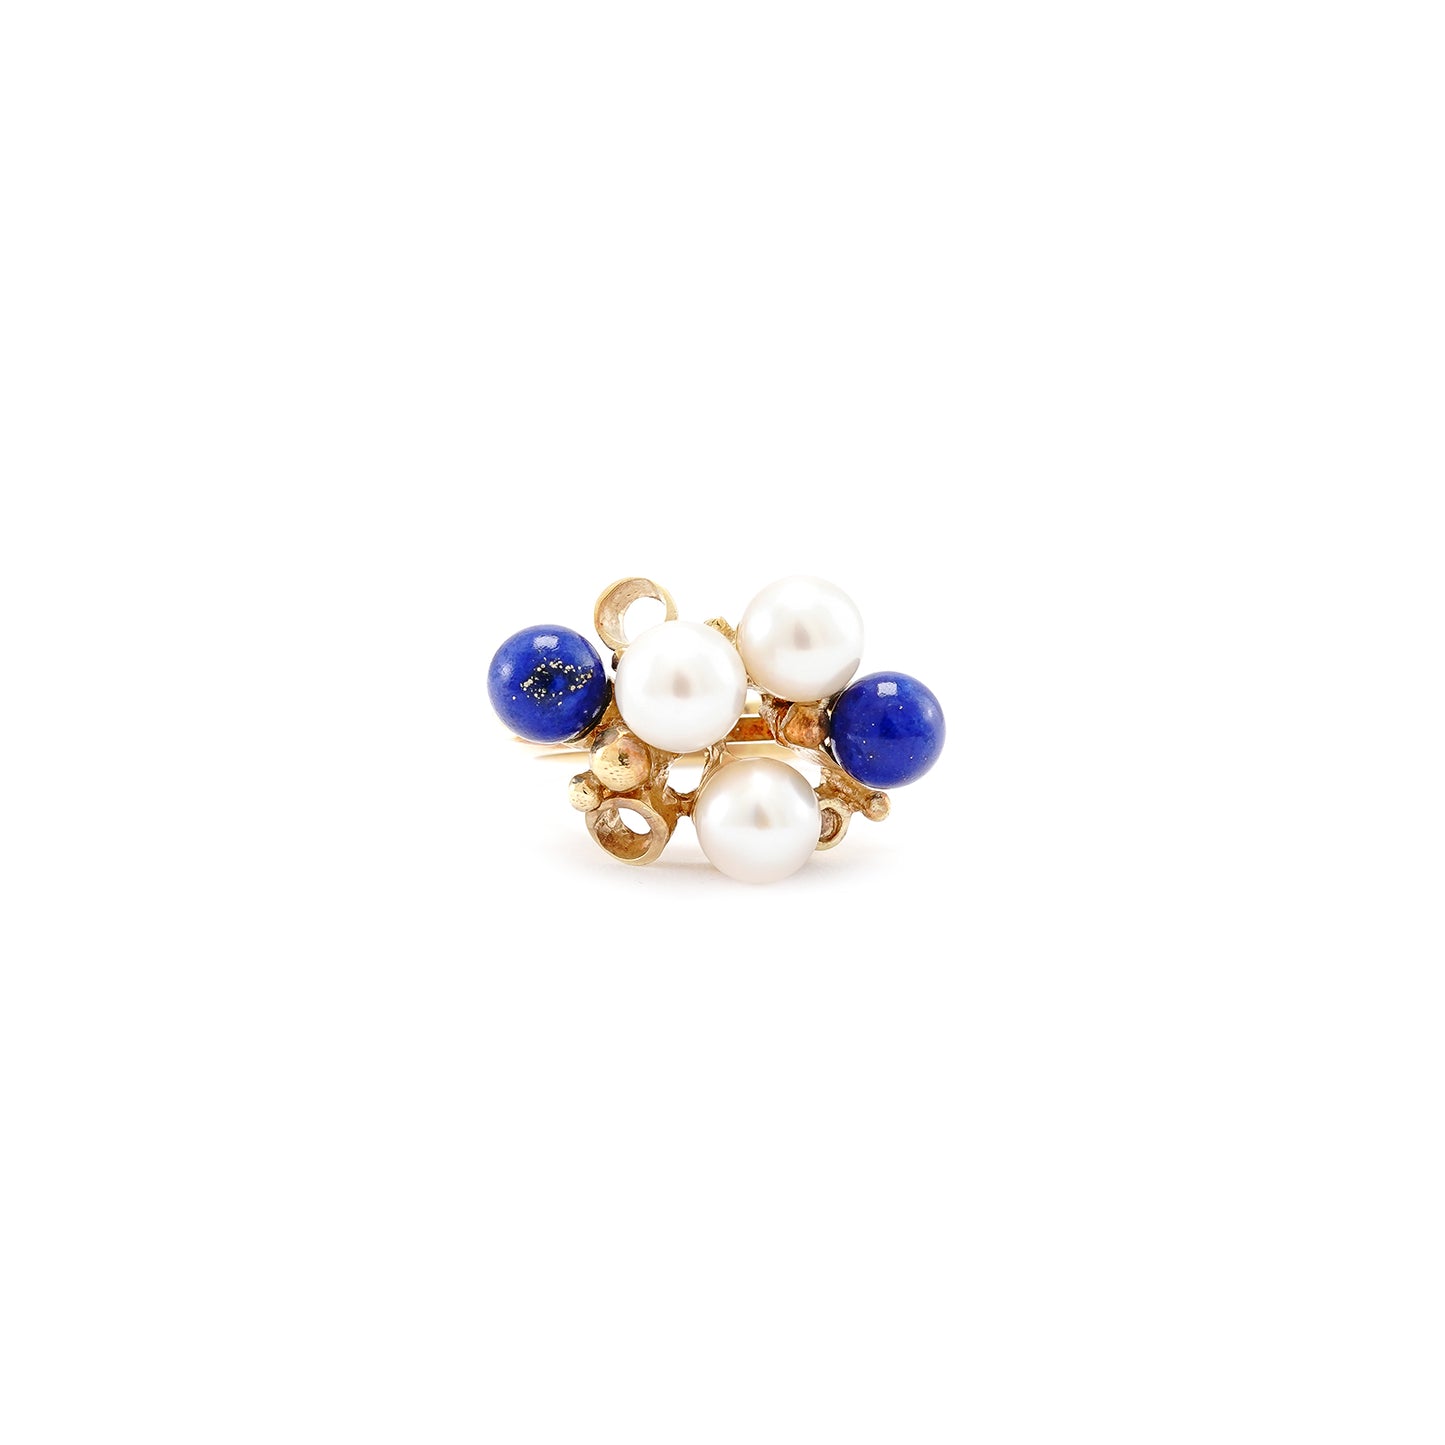 Beautiful women's ring 585 14K gold lapis lazuli cultured pearl pearl jewelry blue white